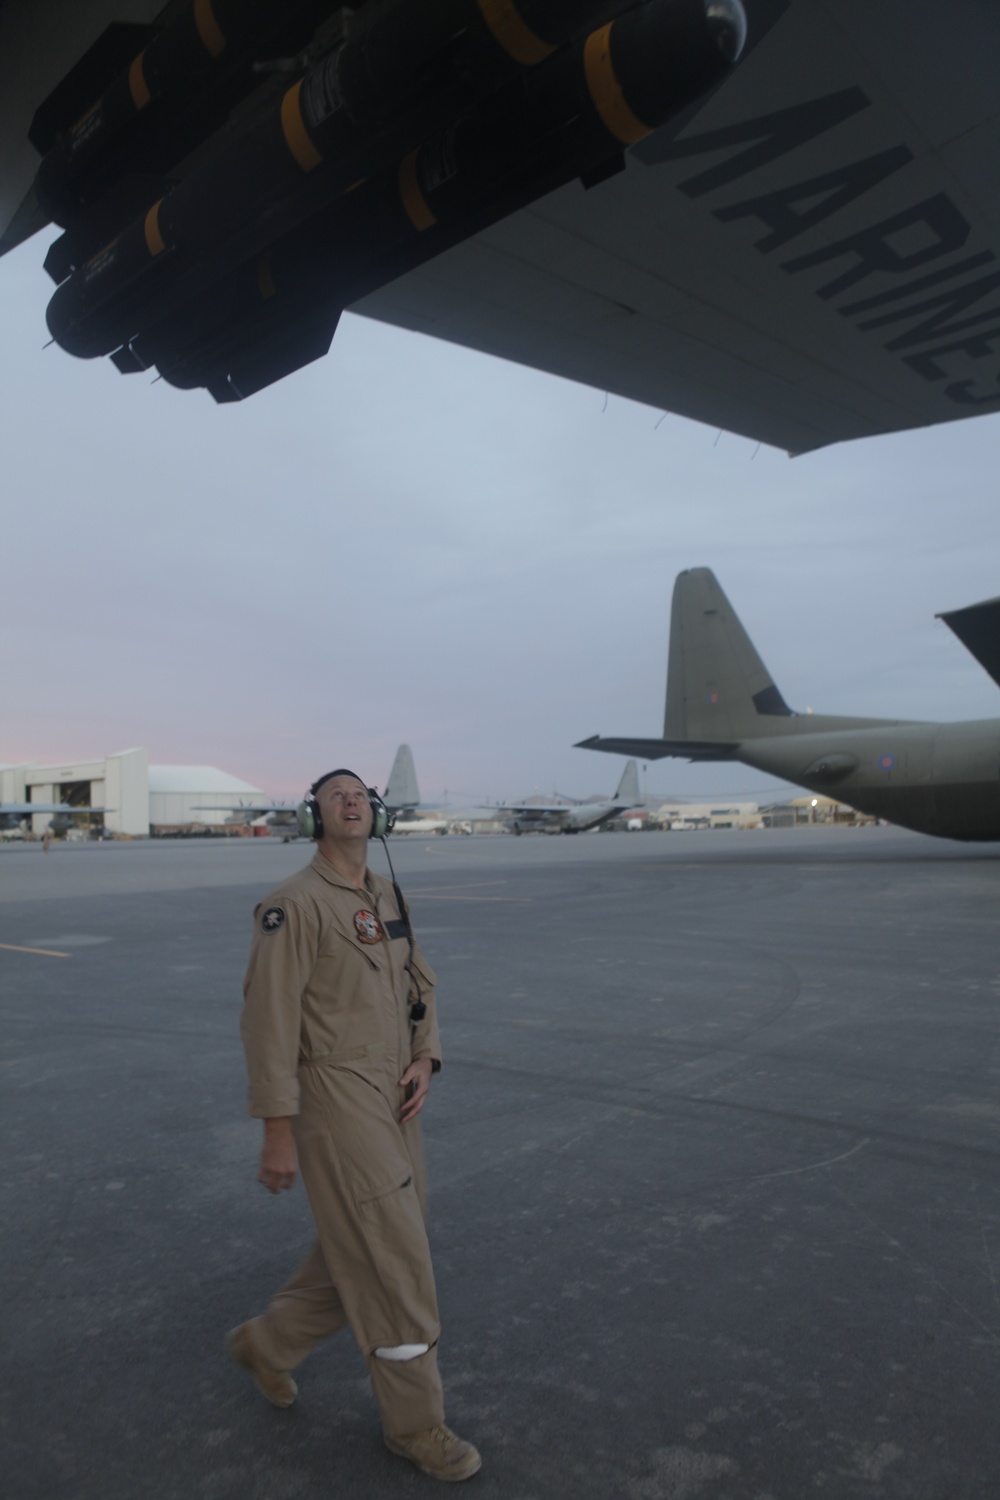 Harvest Hawk brings Marine aviation community together in Afghanistan